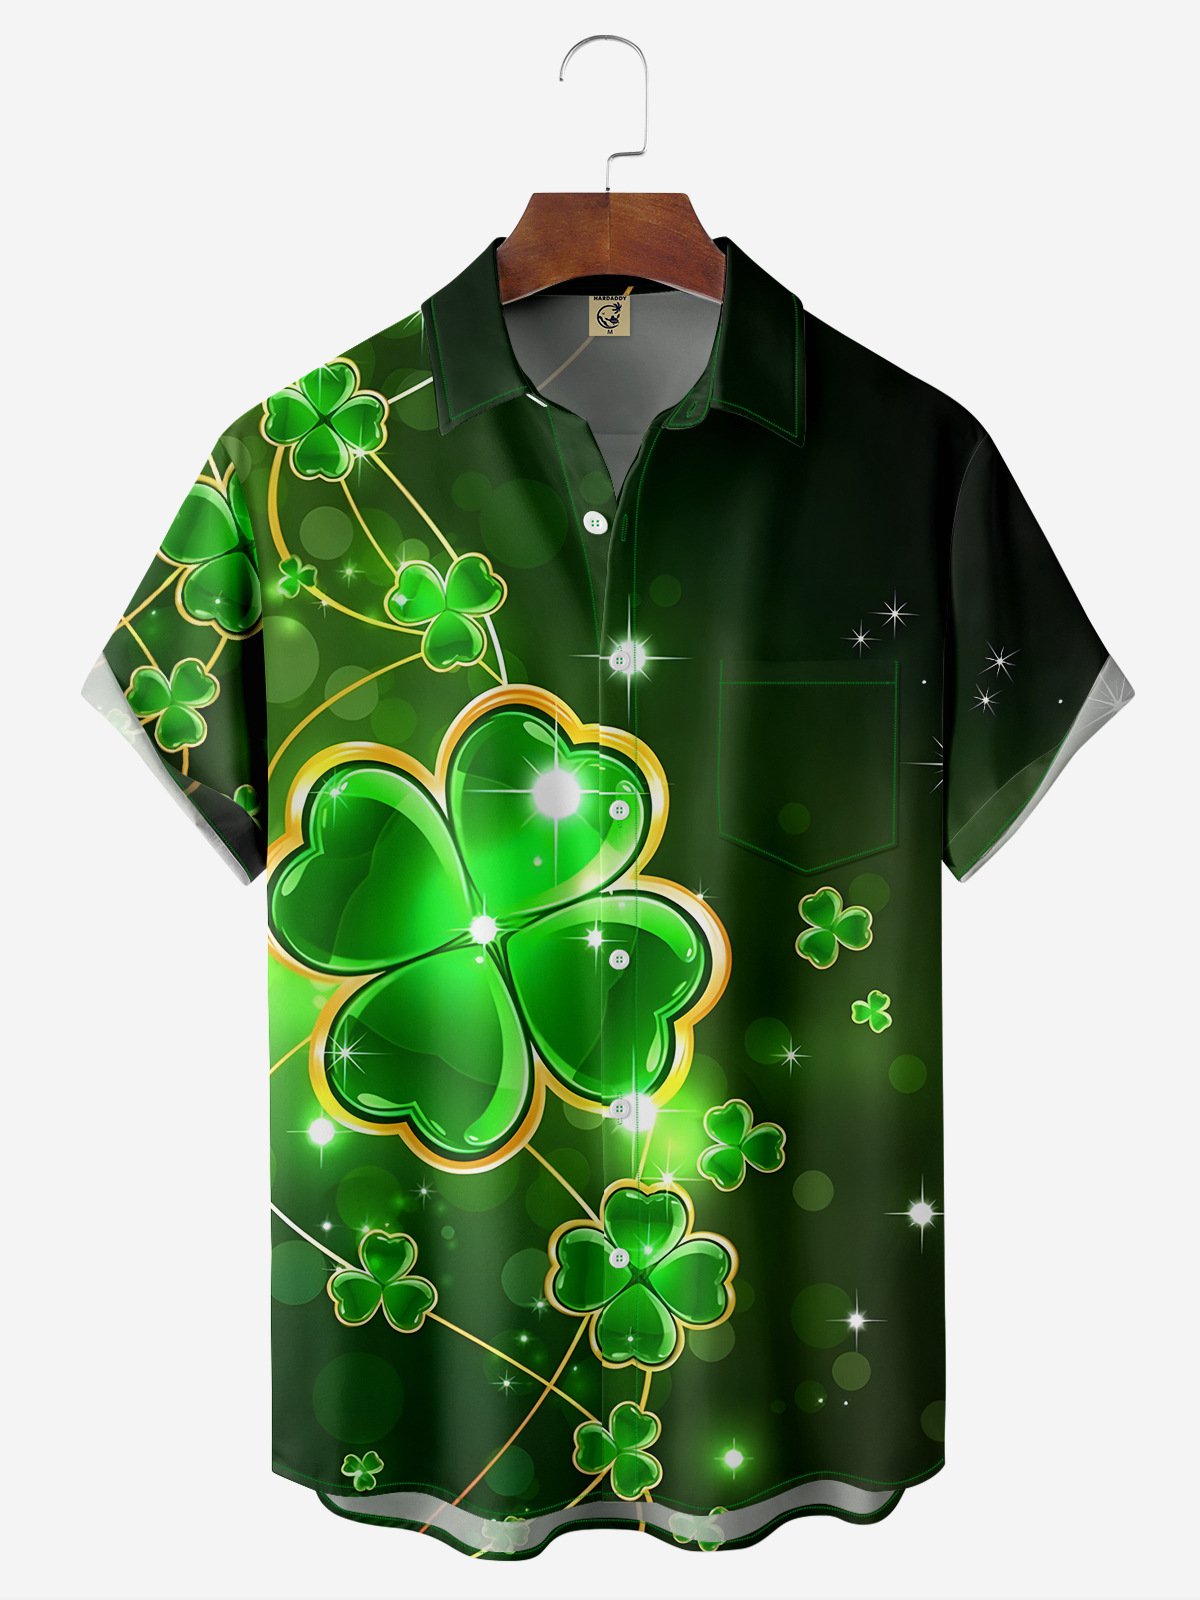 Hardaddy Irish Parade Hawaiian Button Up Shirt for Men Green St. Patrick's Day Lucky Clover Regular Fit Short Sleeve Shirt St Paddy's Day Shirt